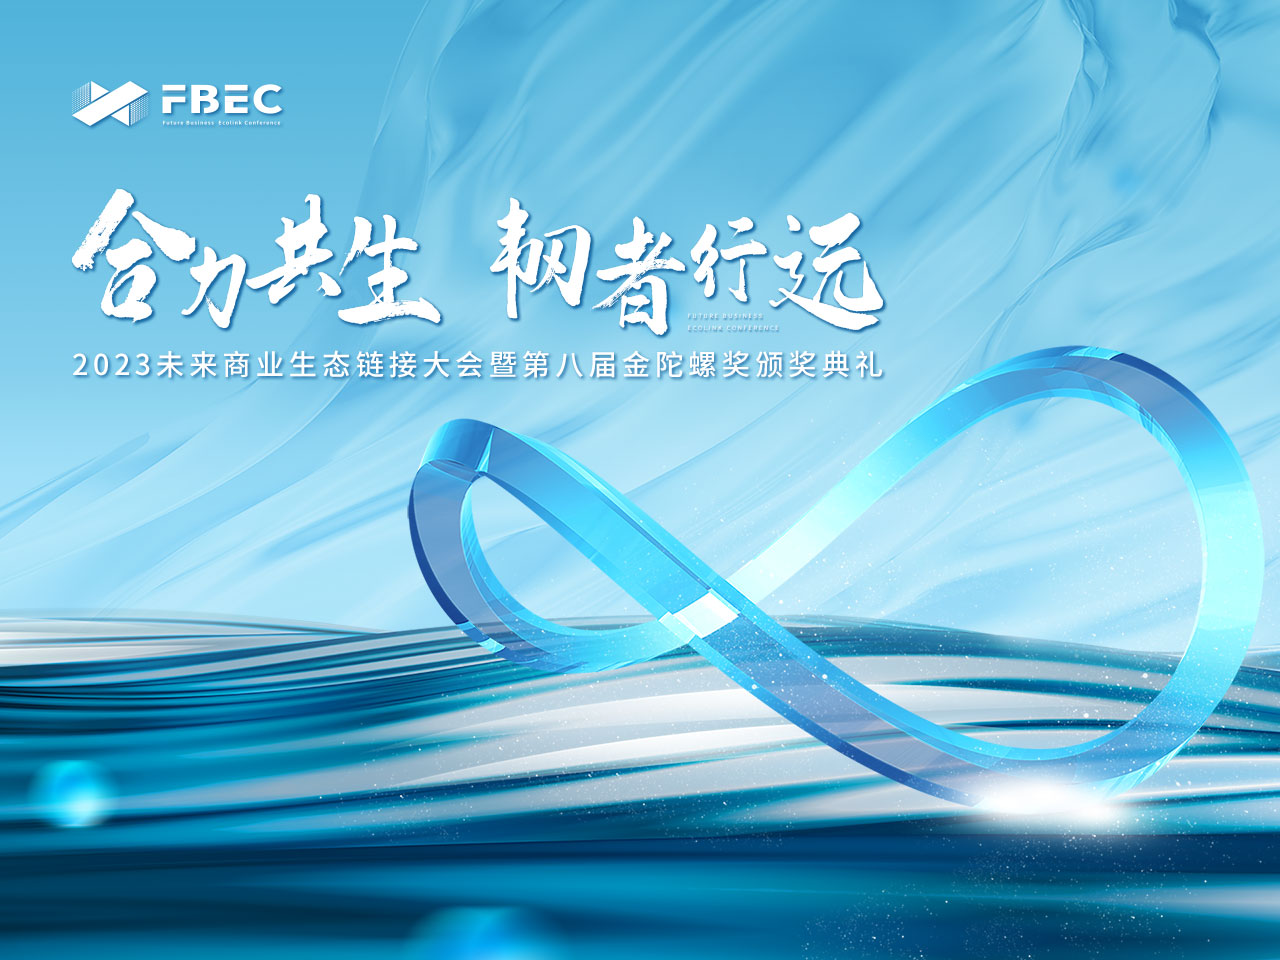 FBEC2023 | Tobii 亚太区XR业务负责人 吴柏其确认出席并发表主题演讲